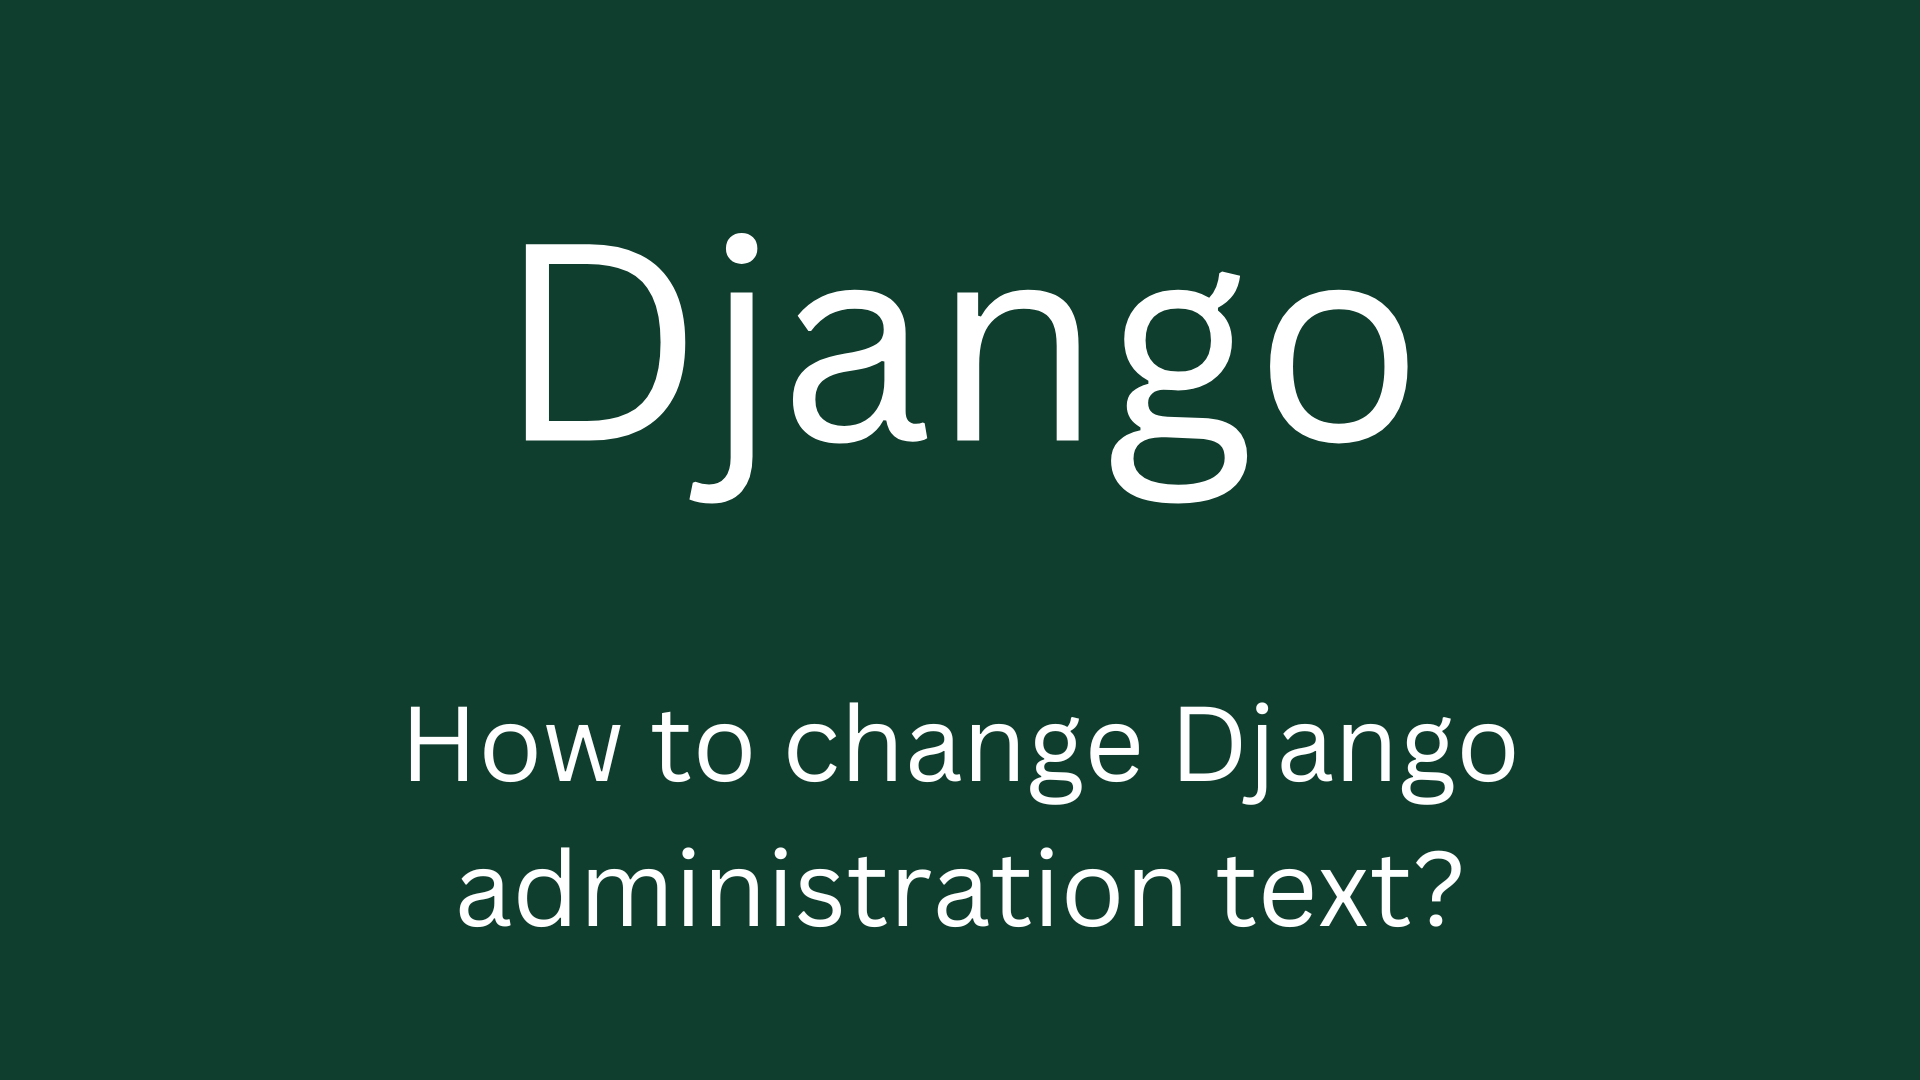 How to change Django administration text?